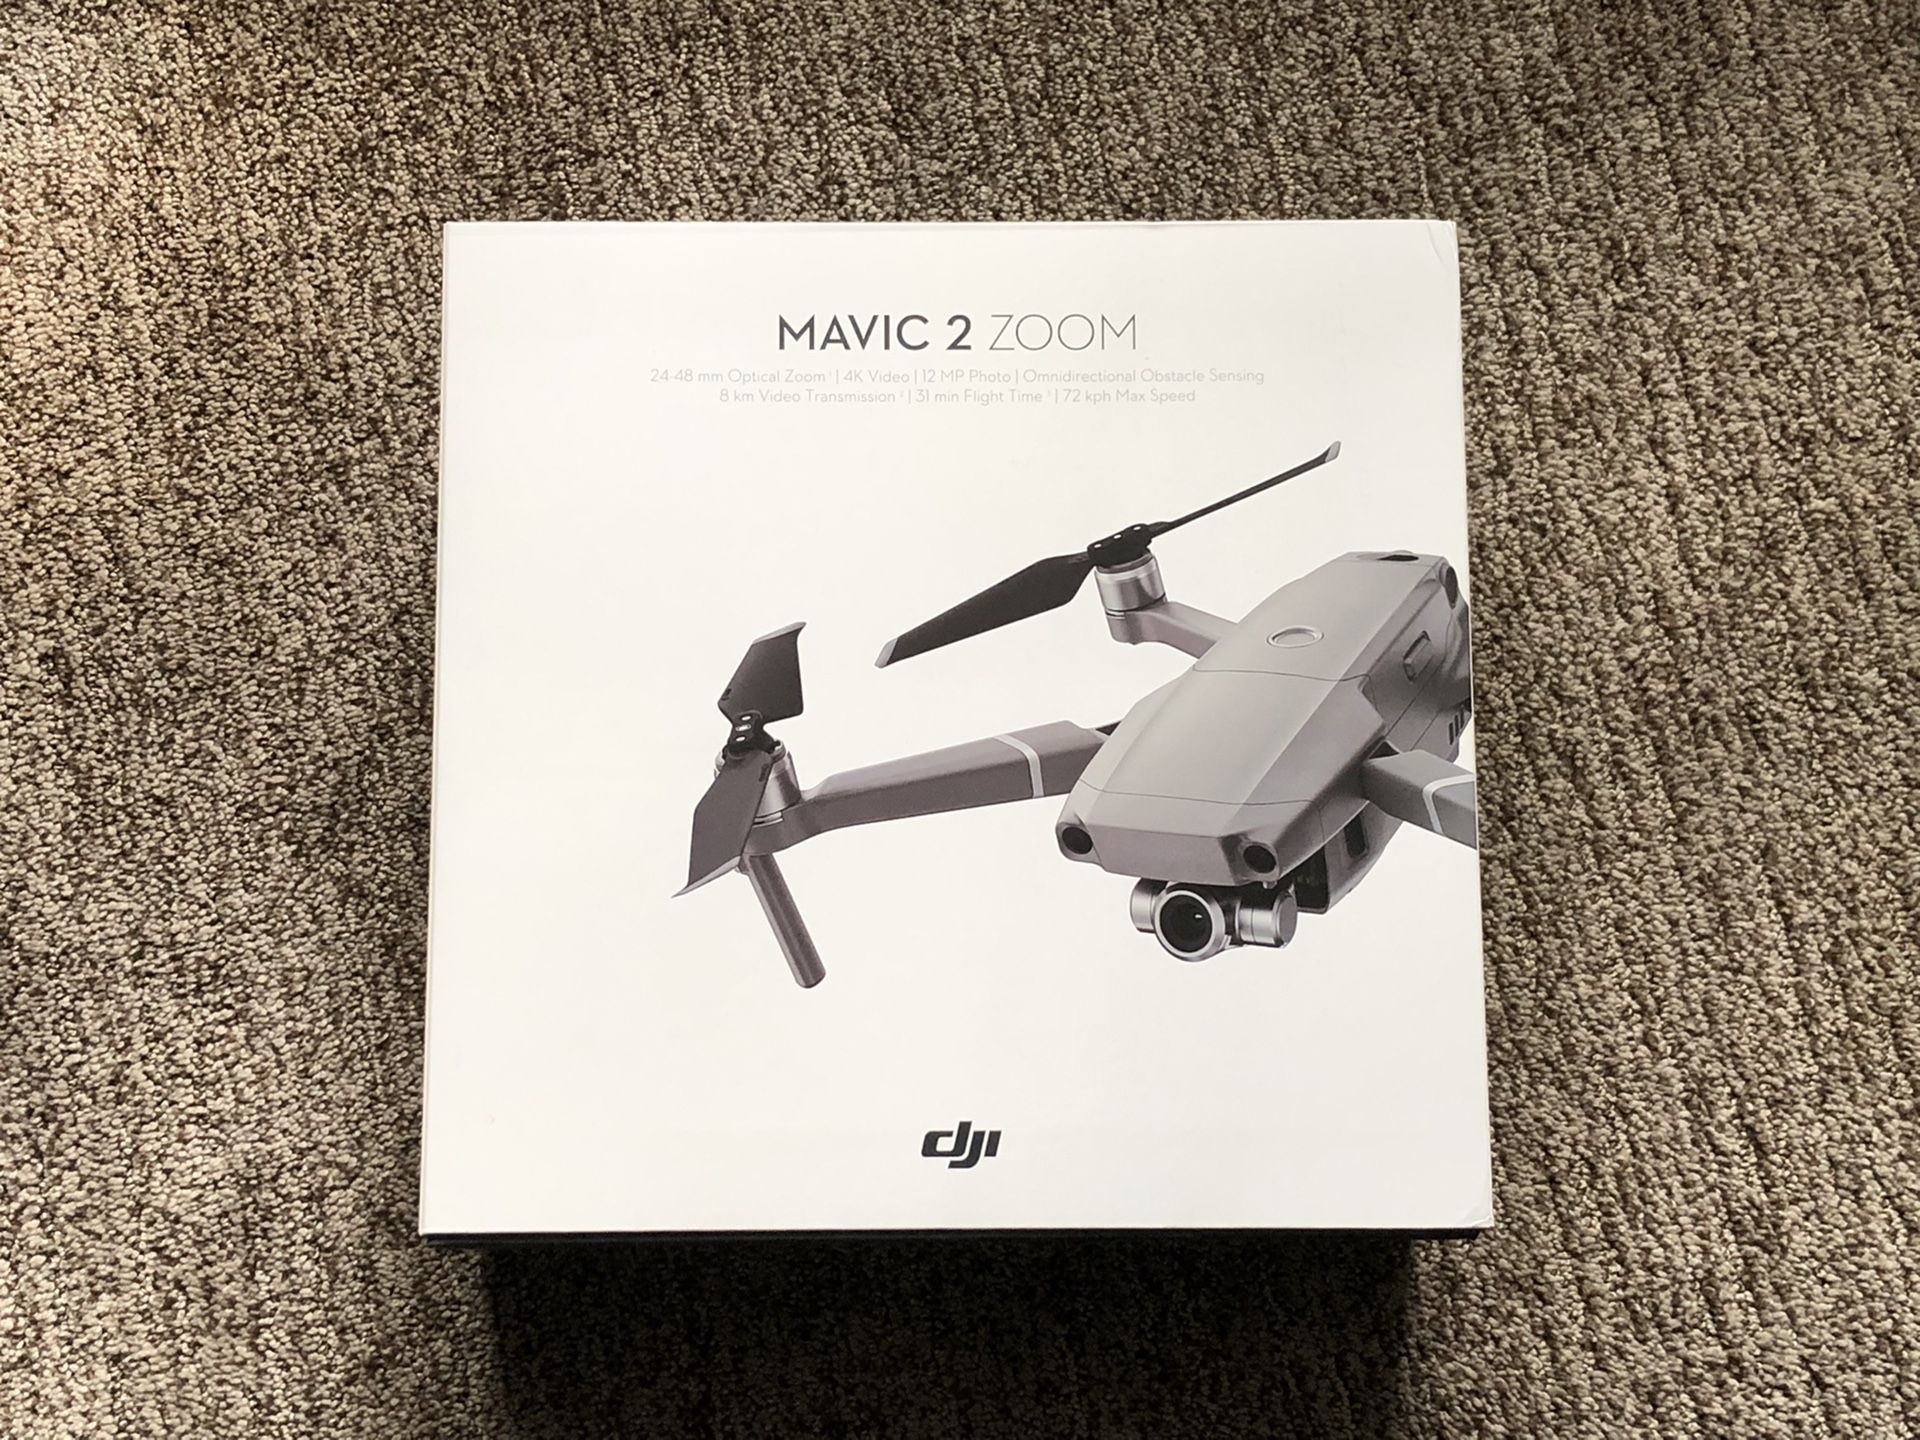 DJI Mavic 2 Zoom Drone - New